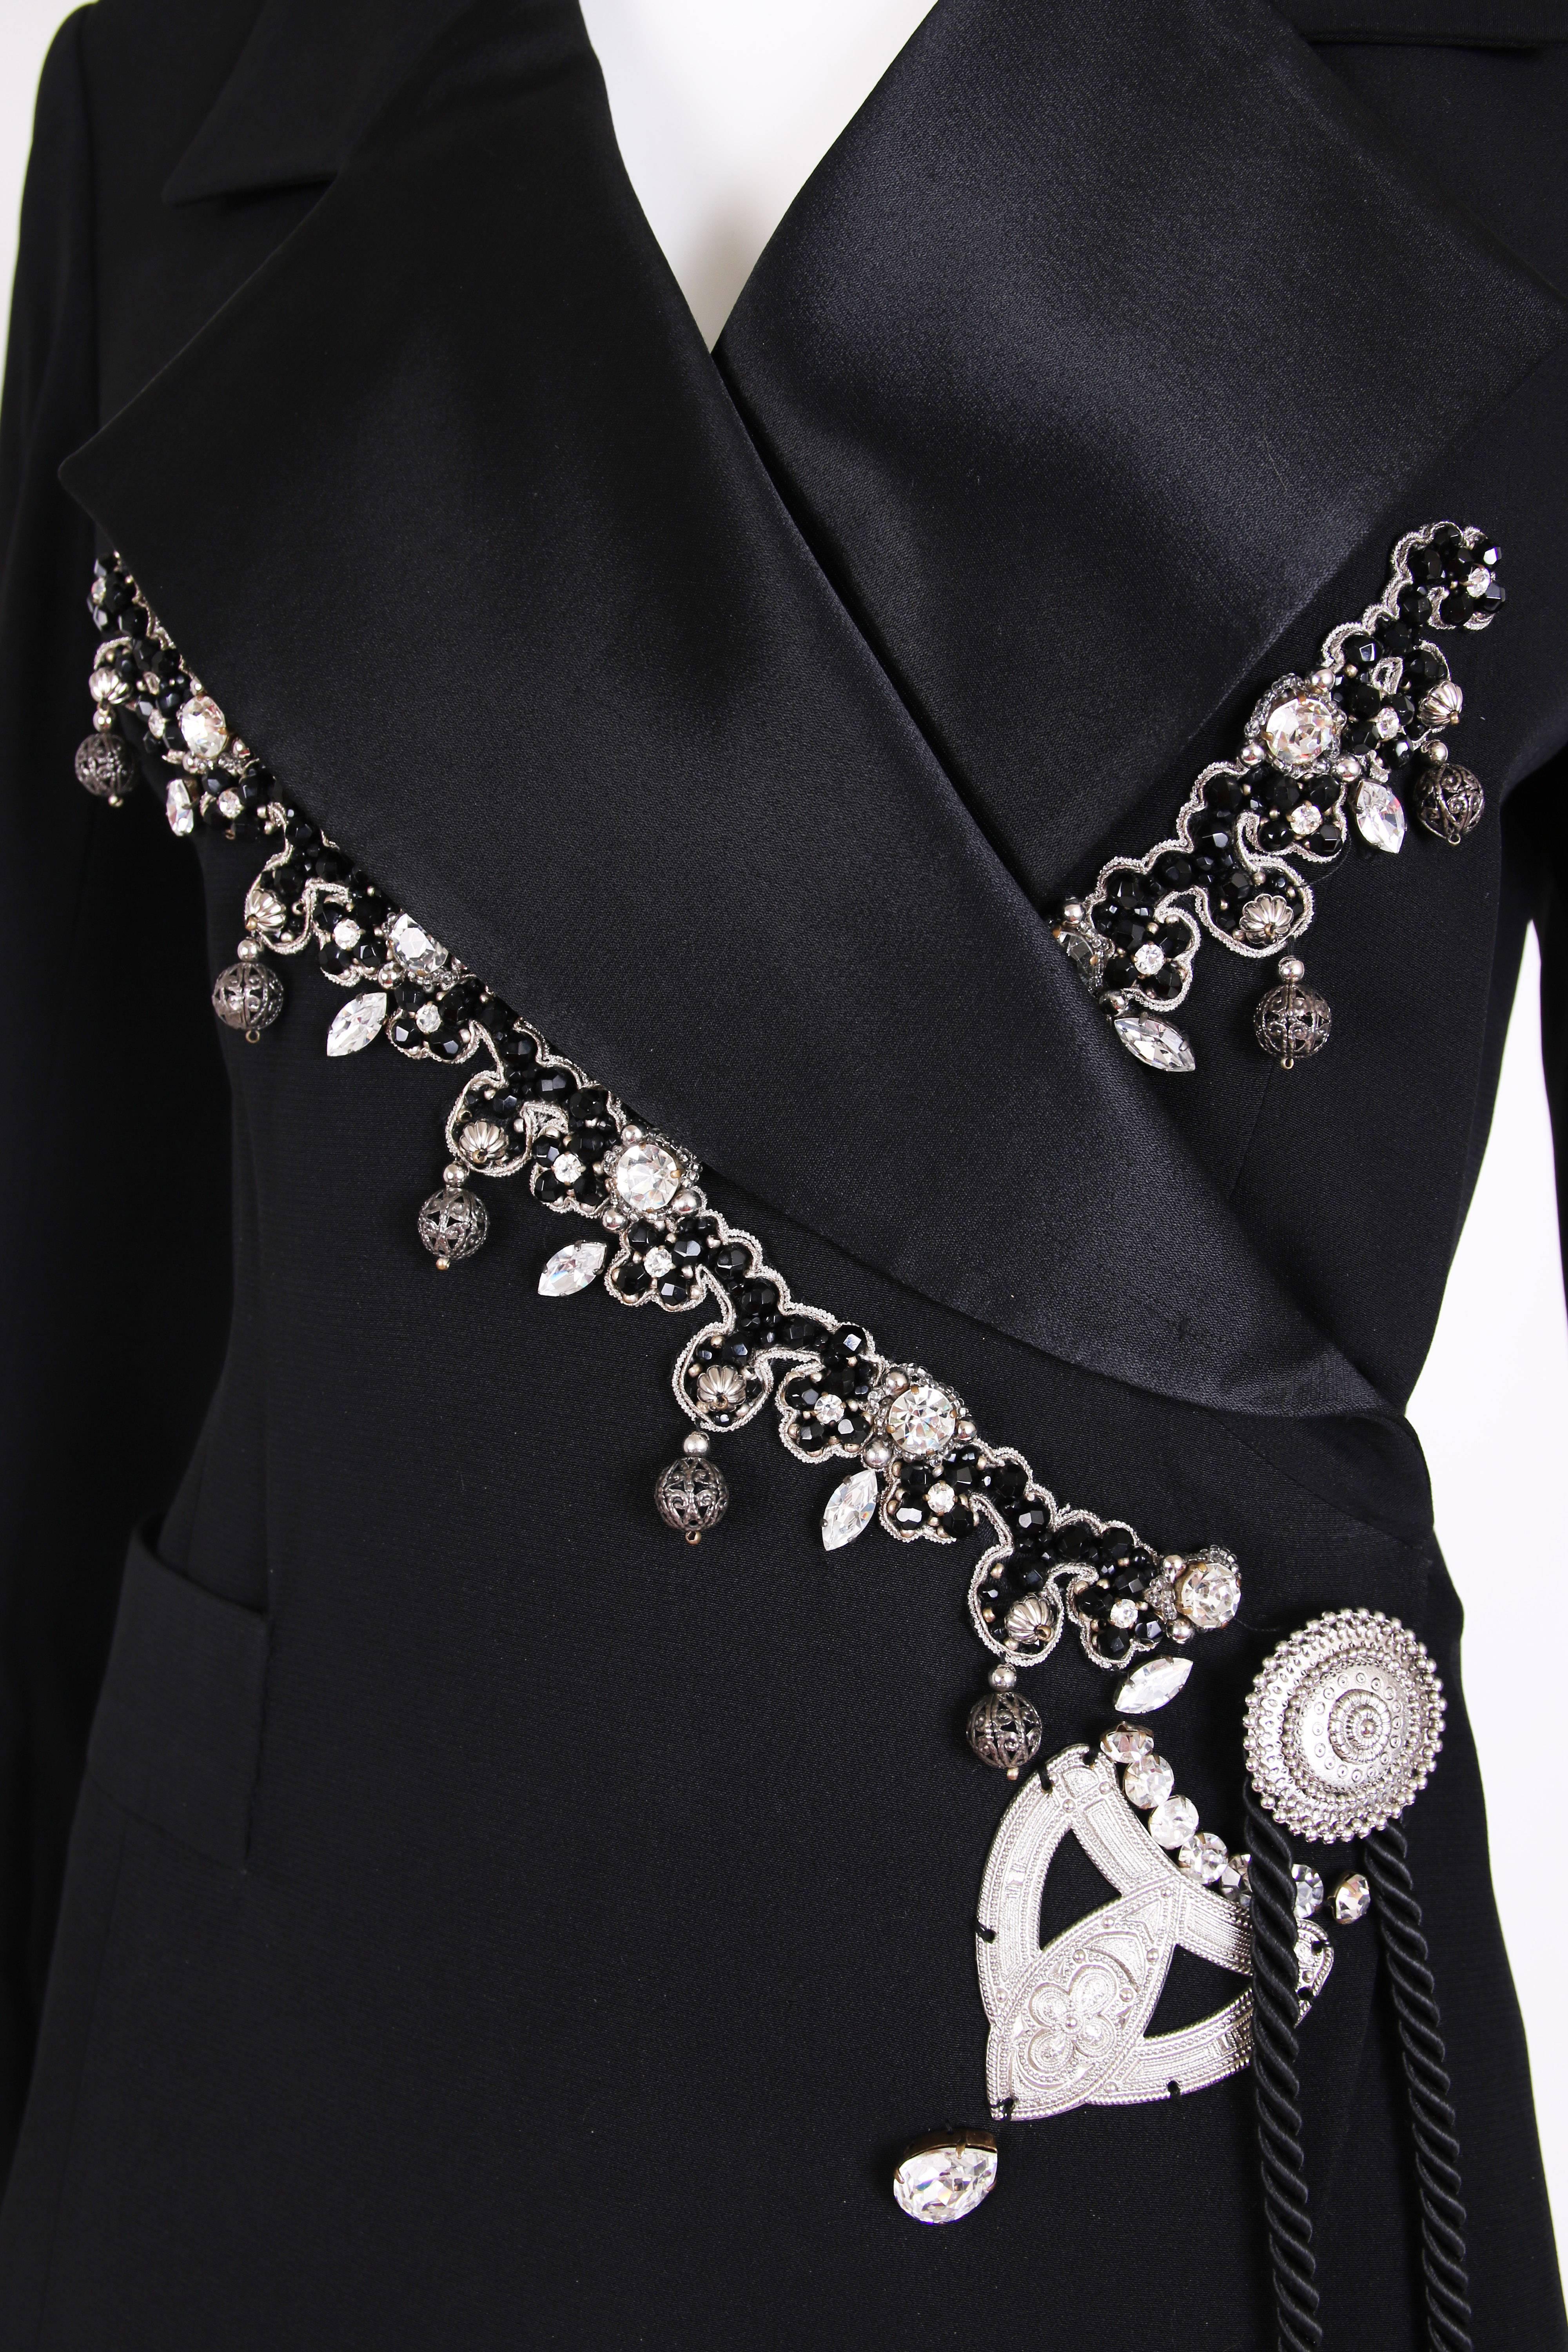 Women's 1994 Christian Dior Black Tuxedo Jacket & Pant Ensemble w/Embelliishments